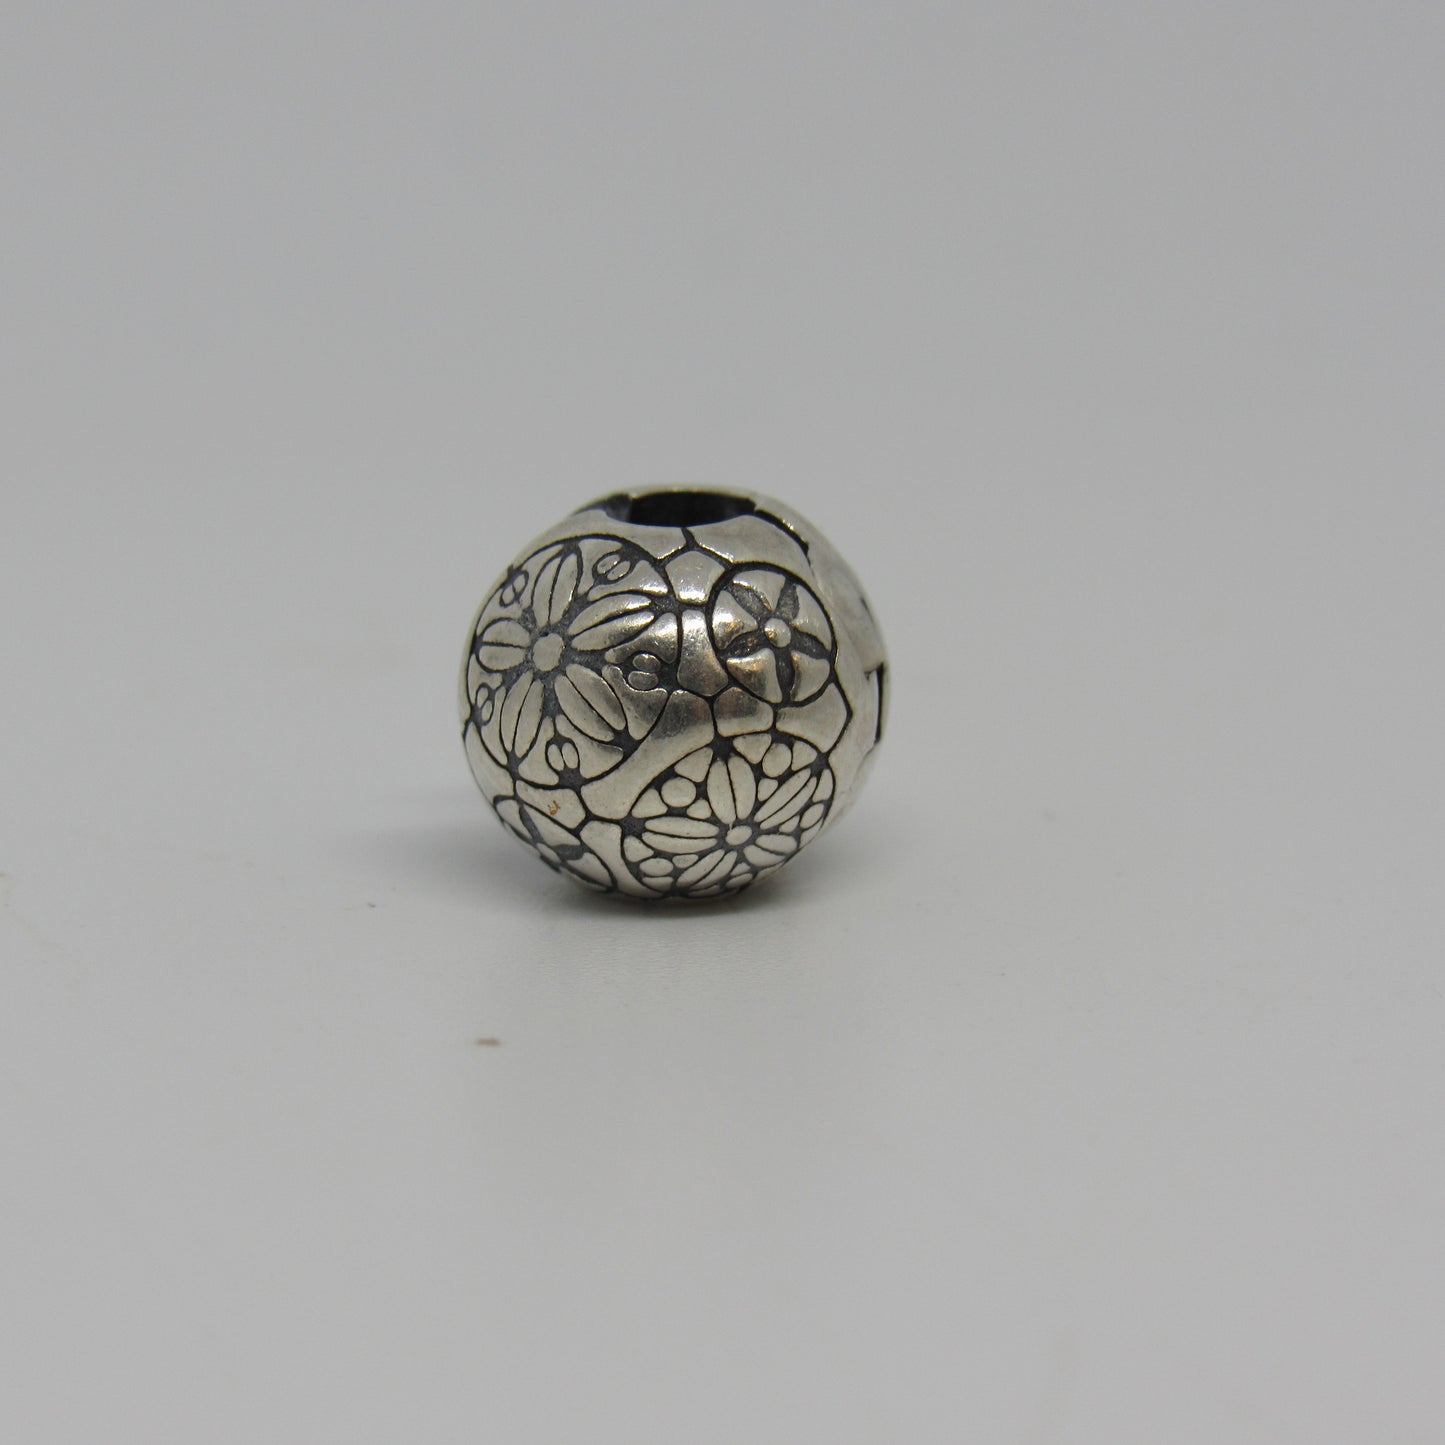 Pandora Sterling Silver Da Vinci Clip Charm Bead - #791010